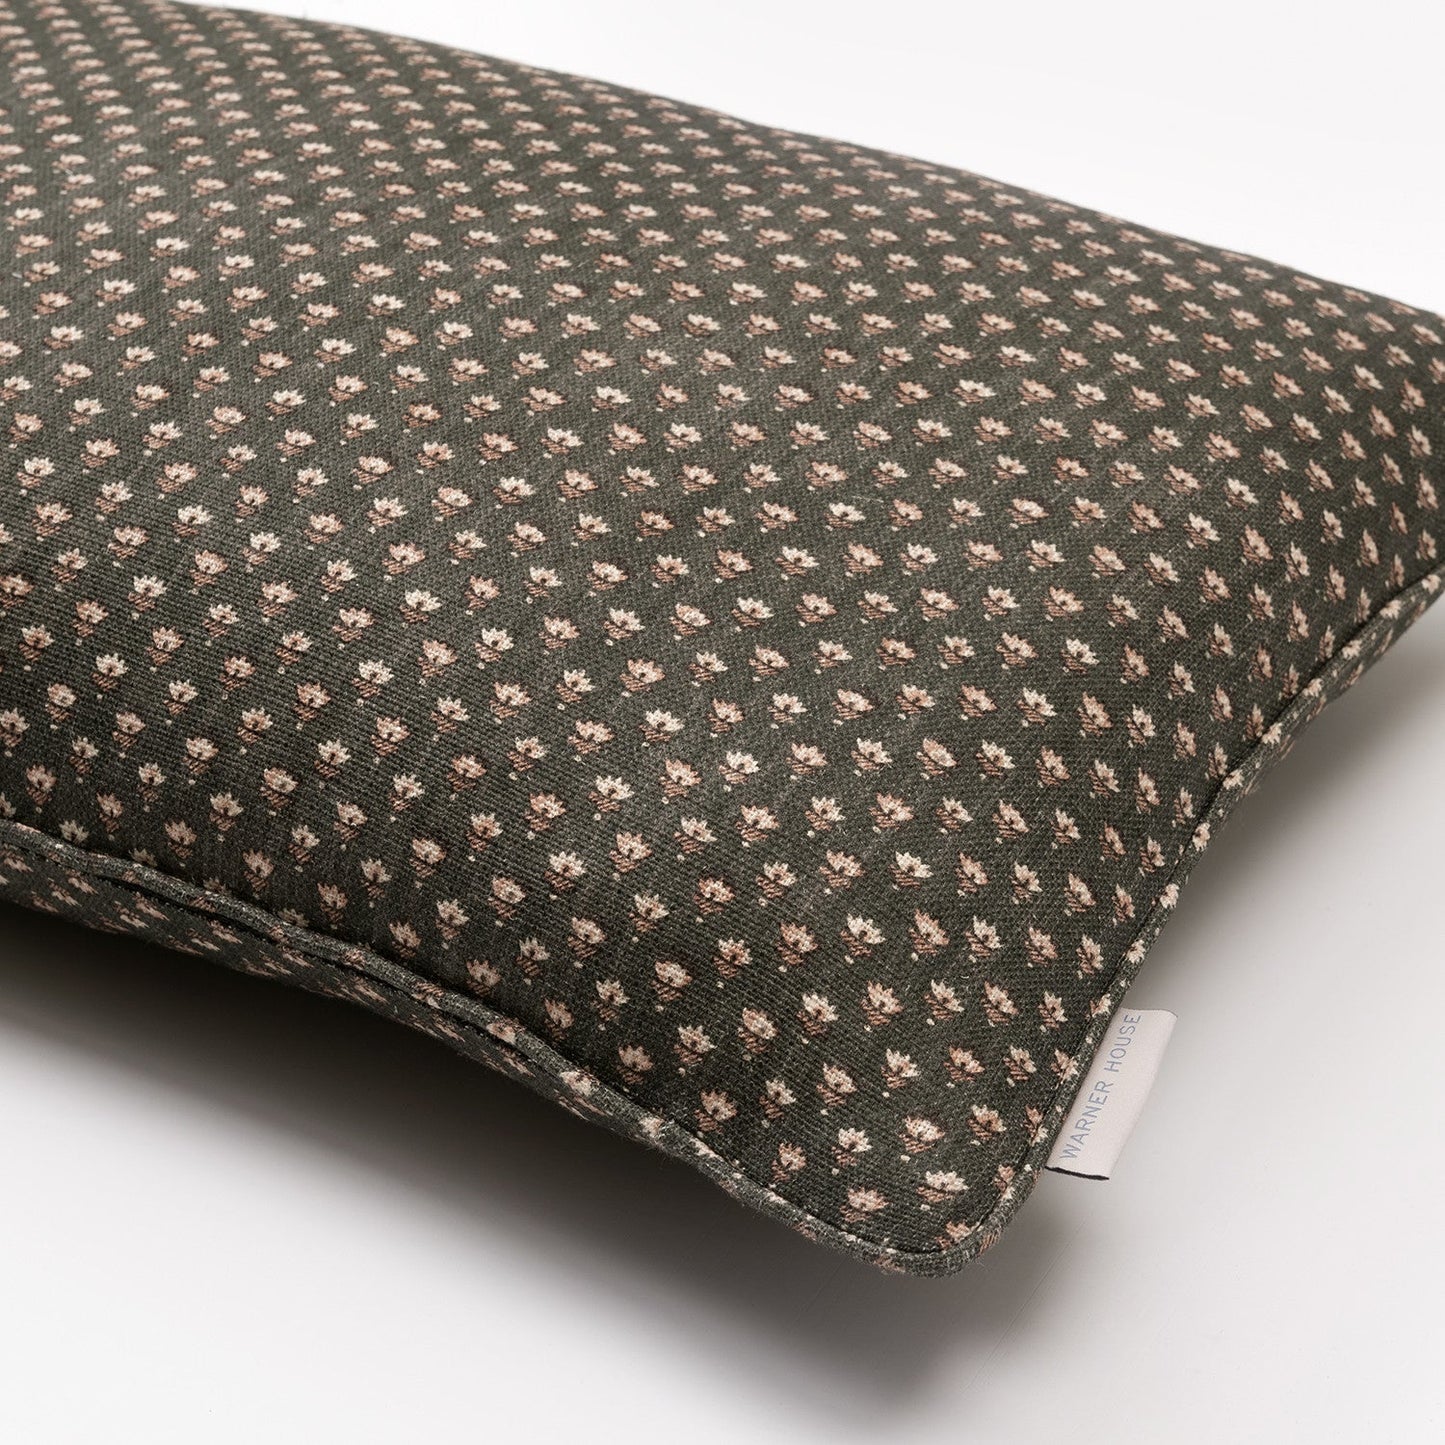 LILOU Charcoal Linen Mix Cushion - Warner House